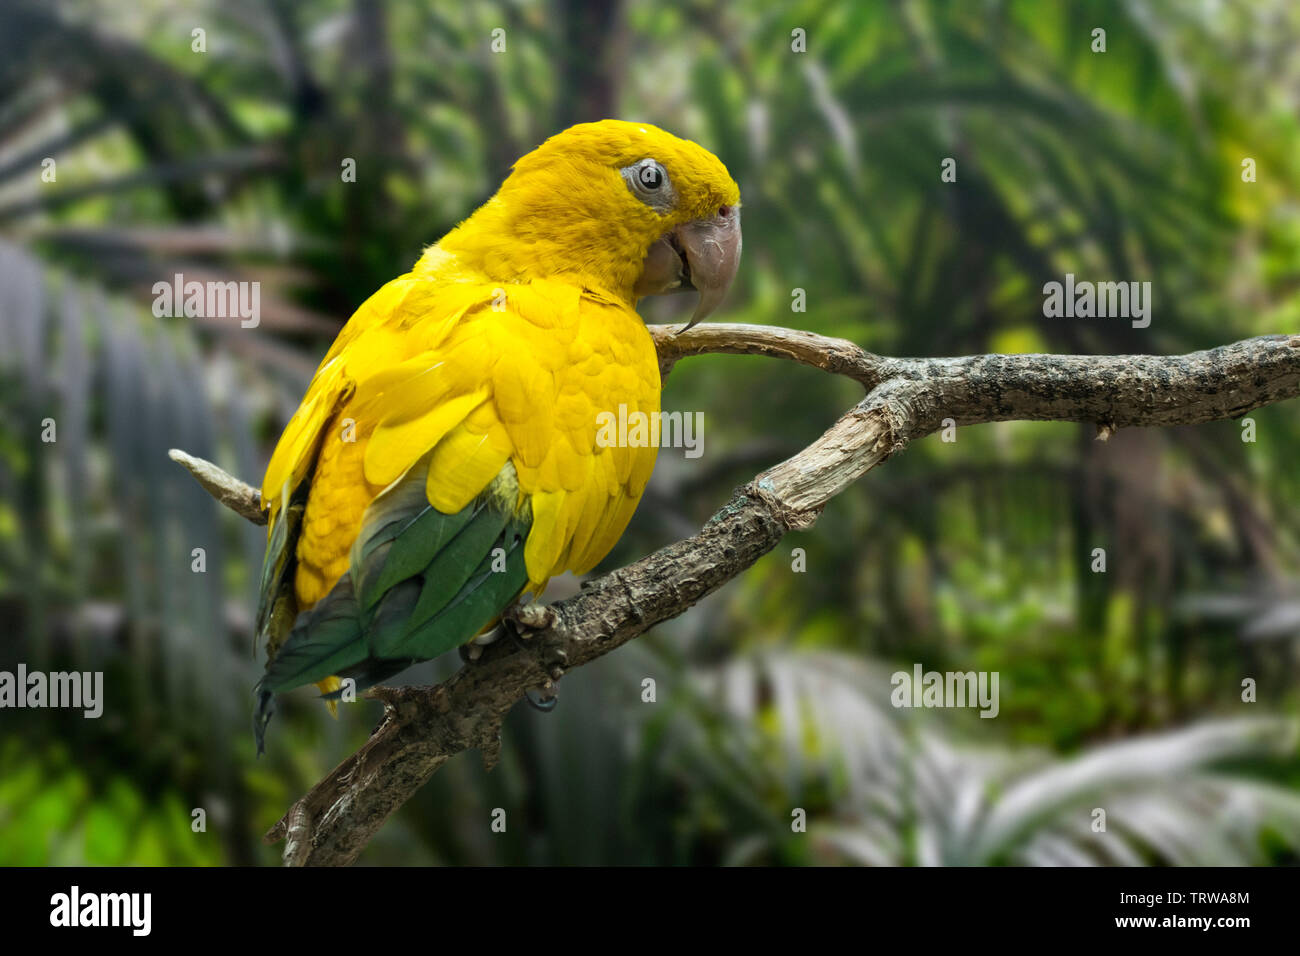 Golden parakeet / golden conure (Guaruba guarouba) perched in tree, Neotropical parrot native to the Amazon Basin of interior northern Brazil Stock Photo